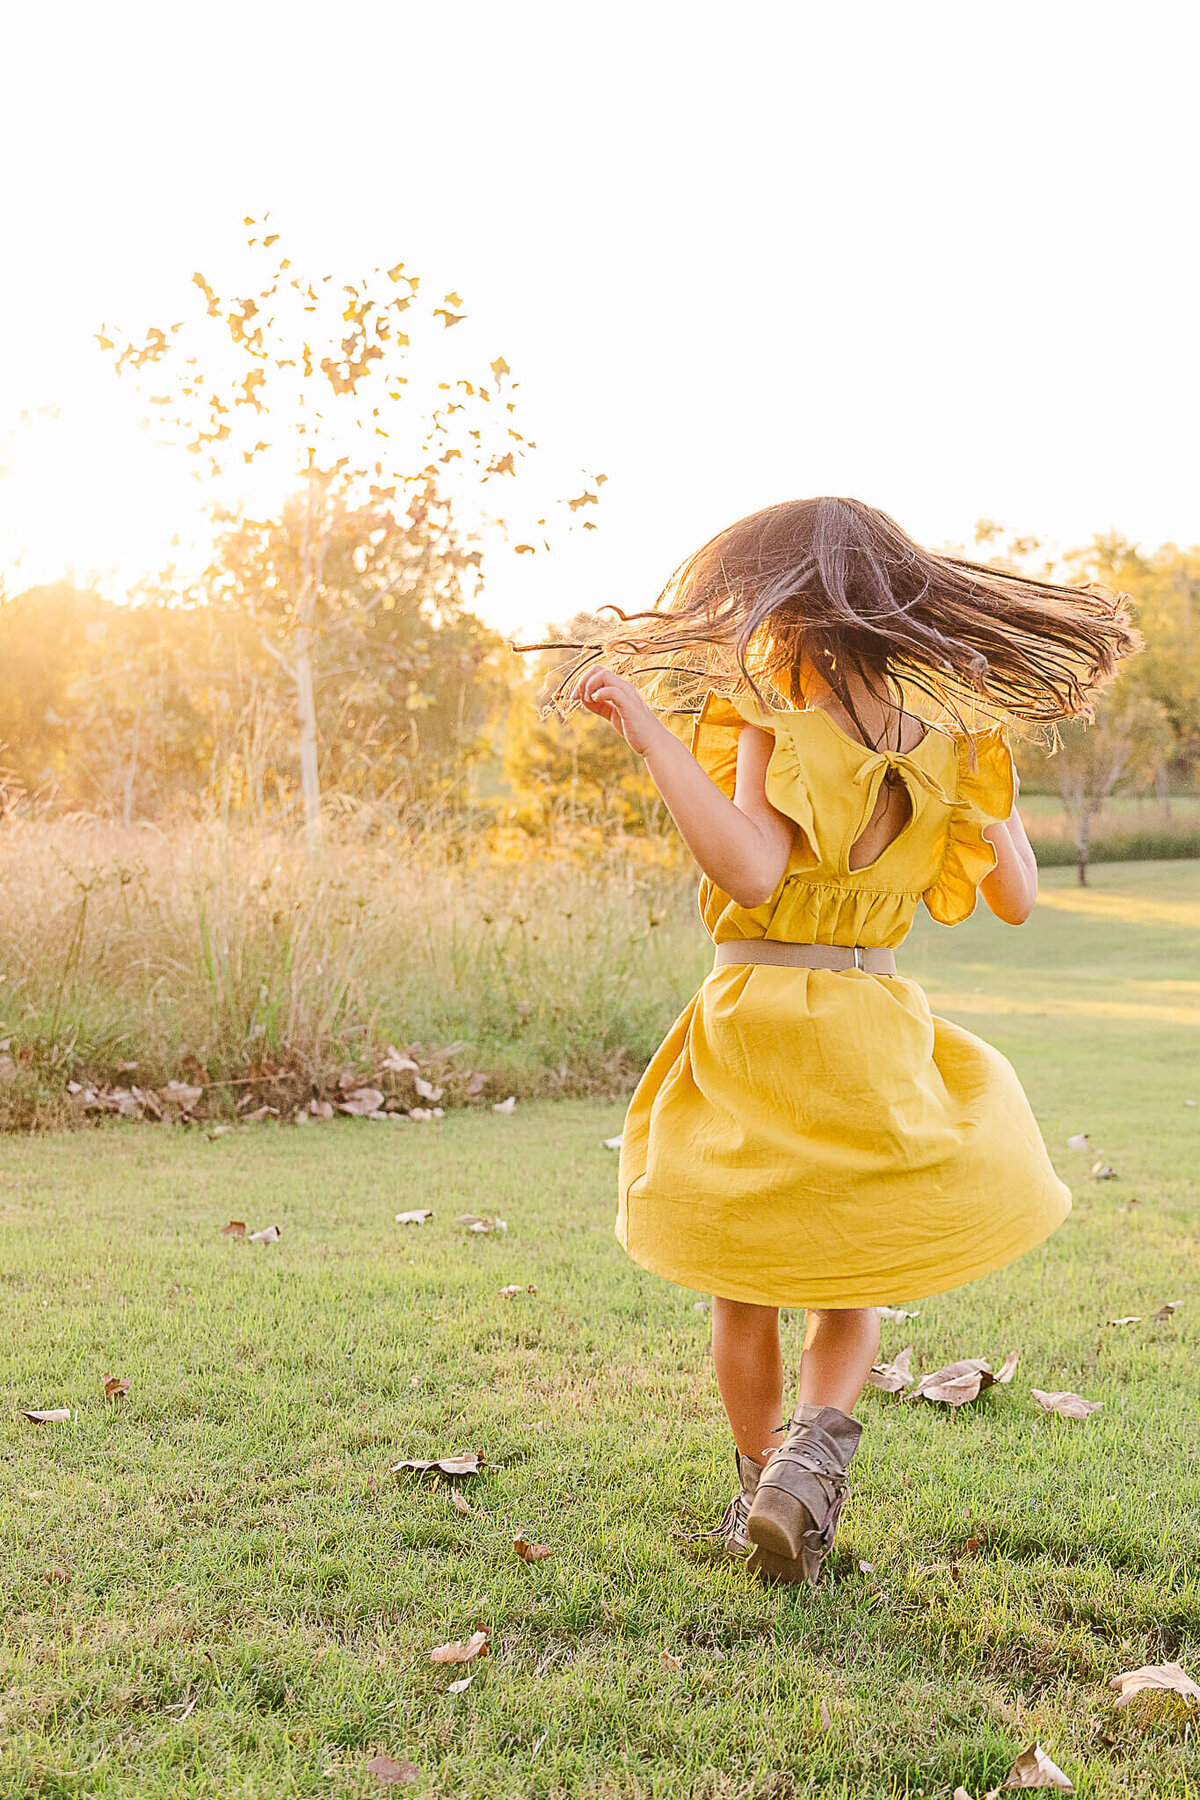 Girl dancing in yellow dress with sun flare